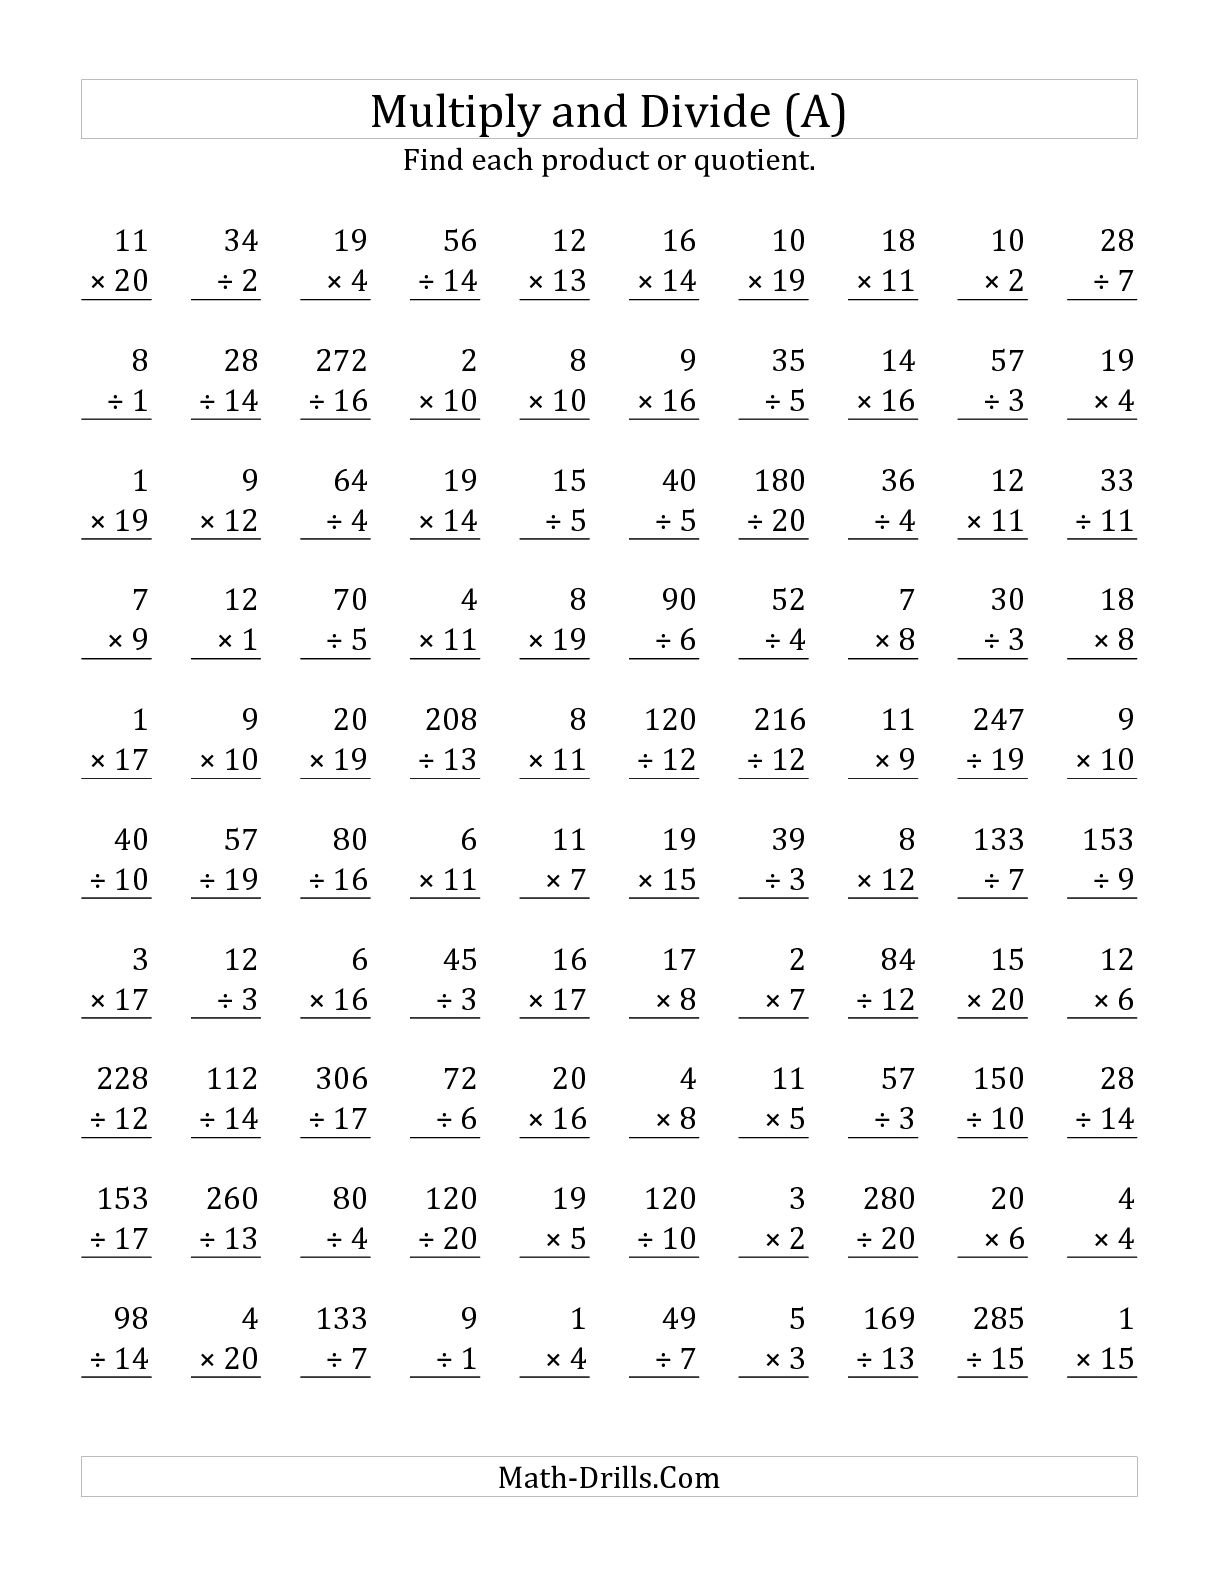 13-best-images-of-math-drill-100-problems-worksheet-math